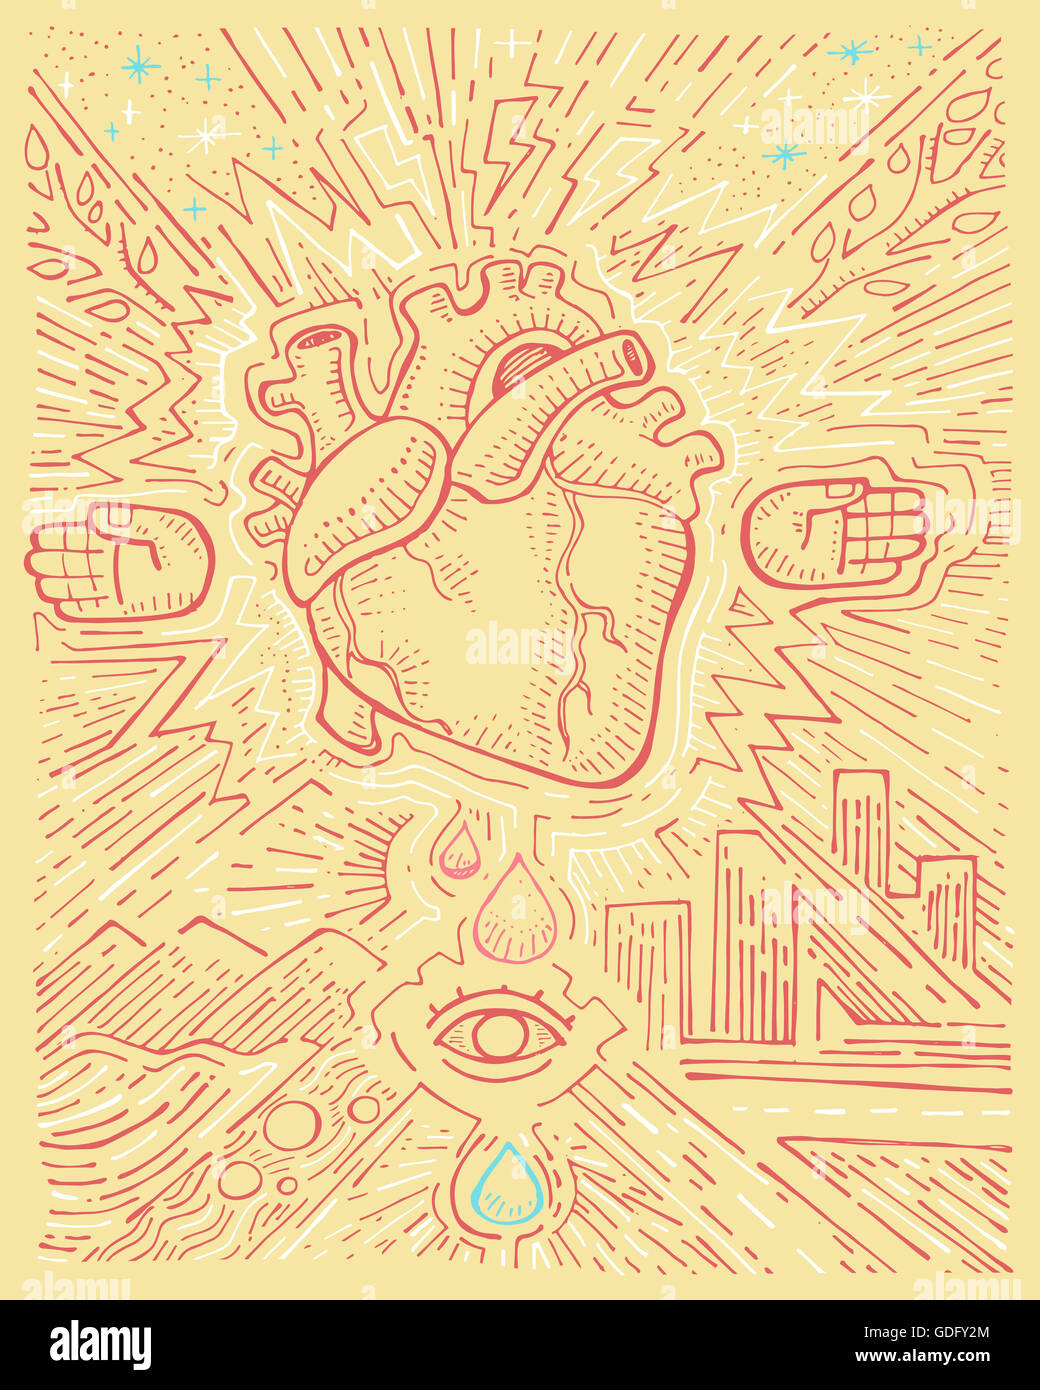 Hand drawn illustration or drawing of  a human heart and urban symbols Stock Photo